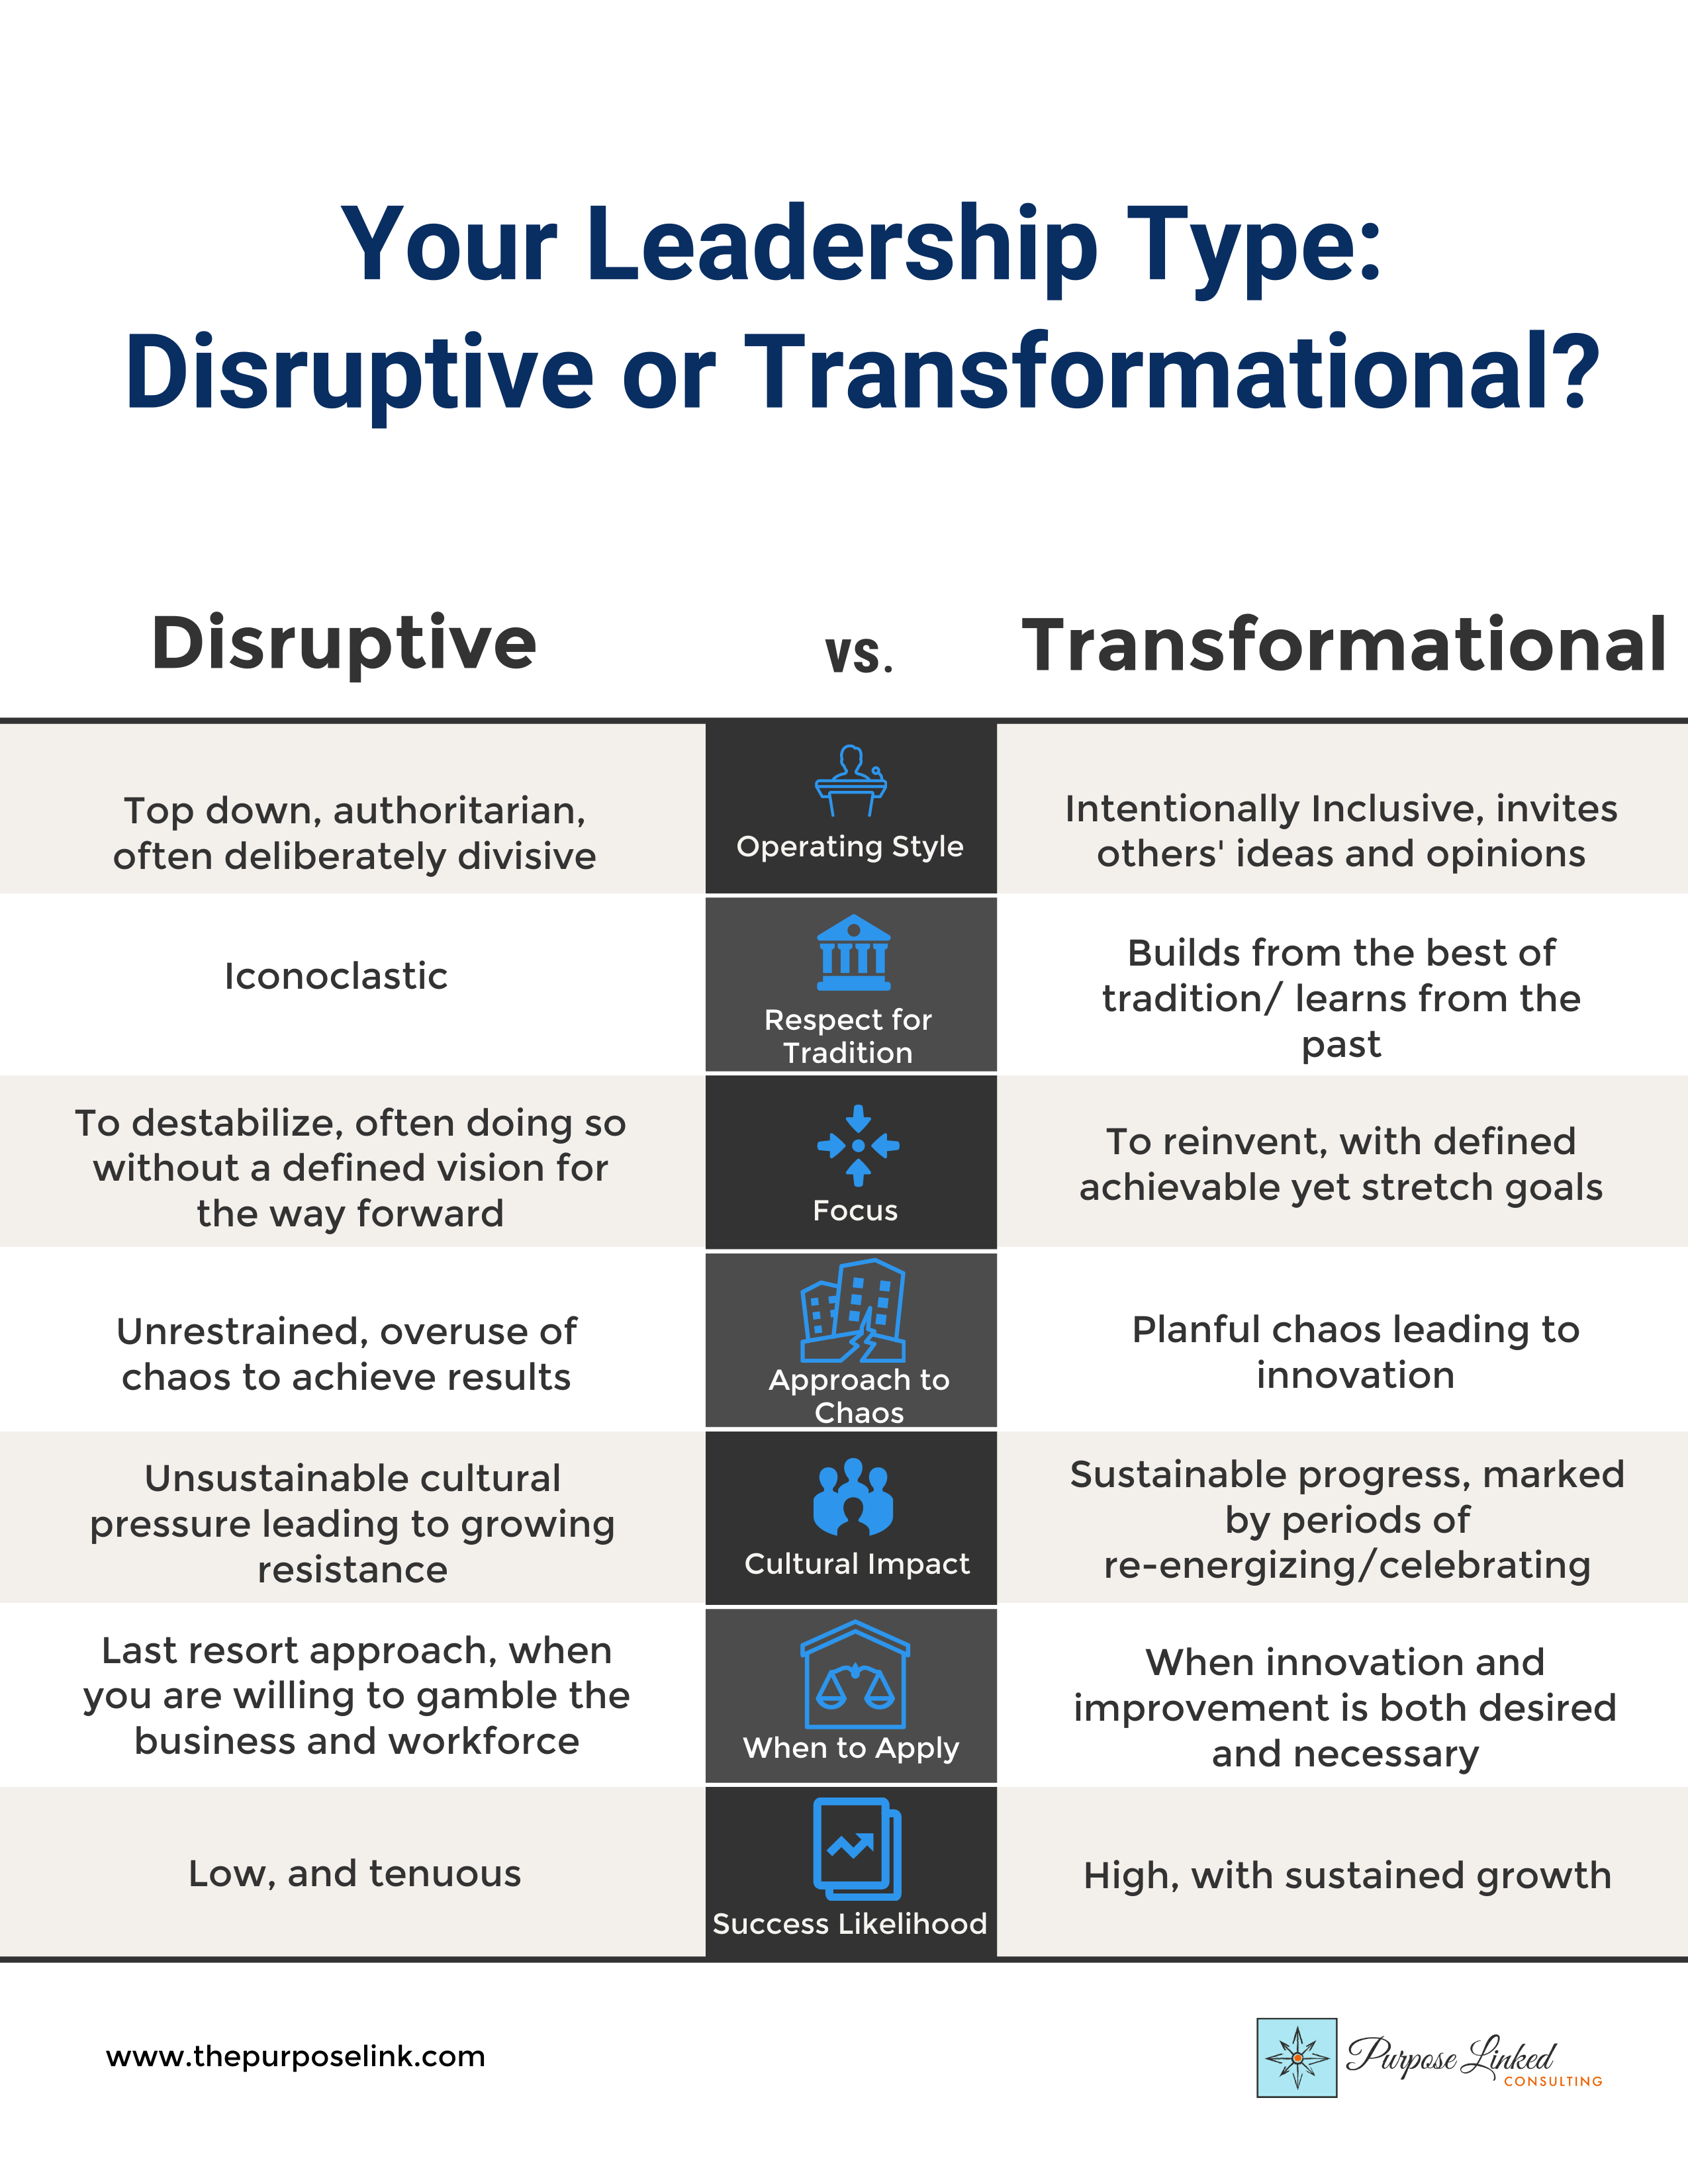 Disruptive vs Transformational Leadership